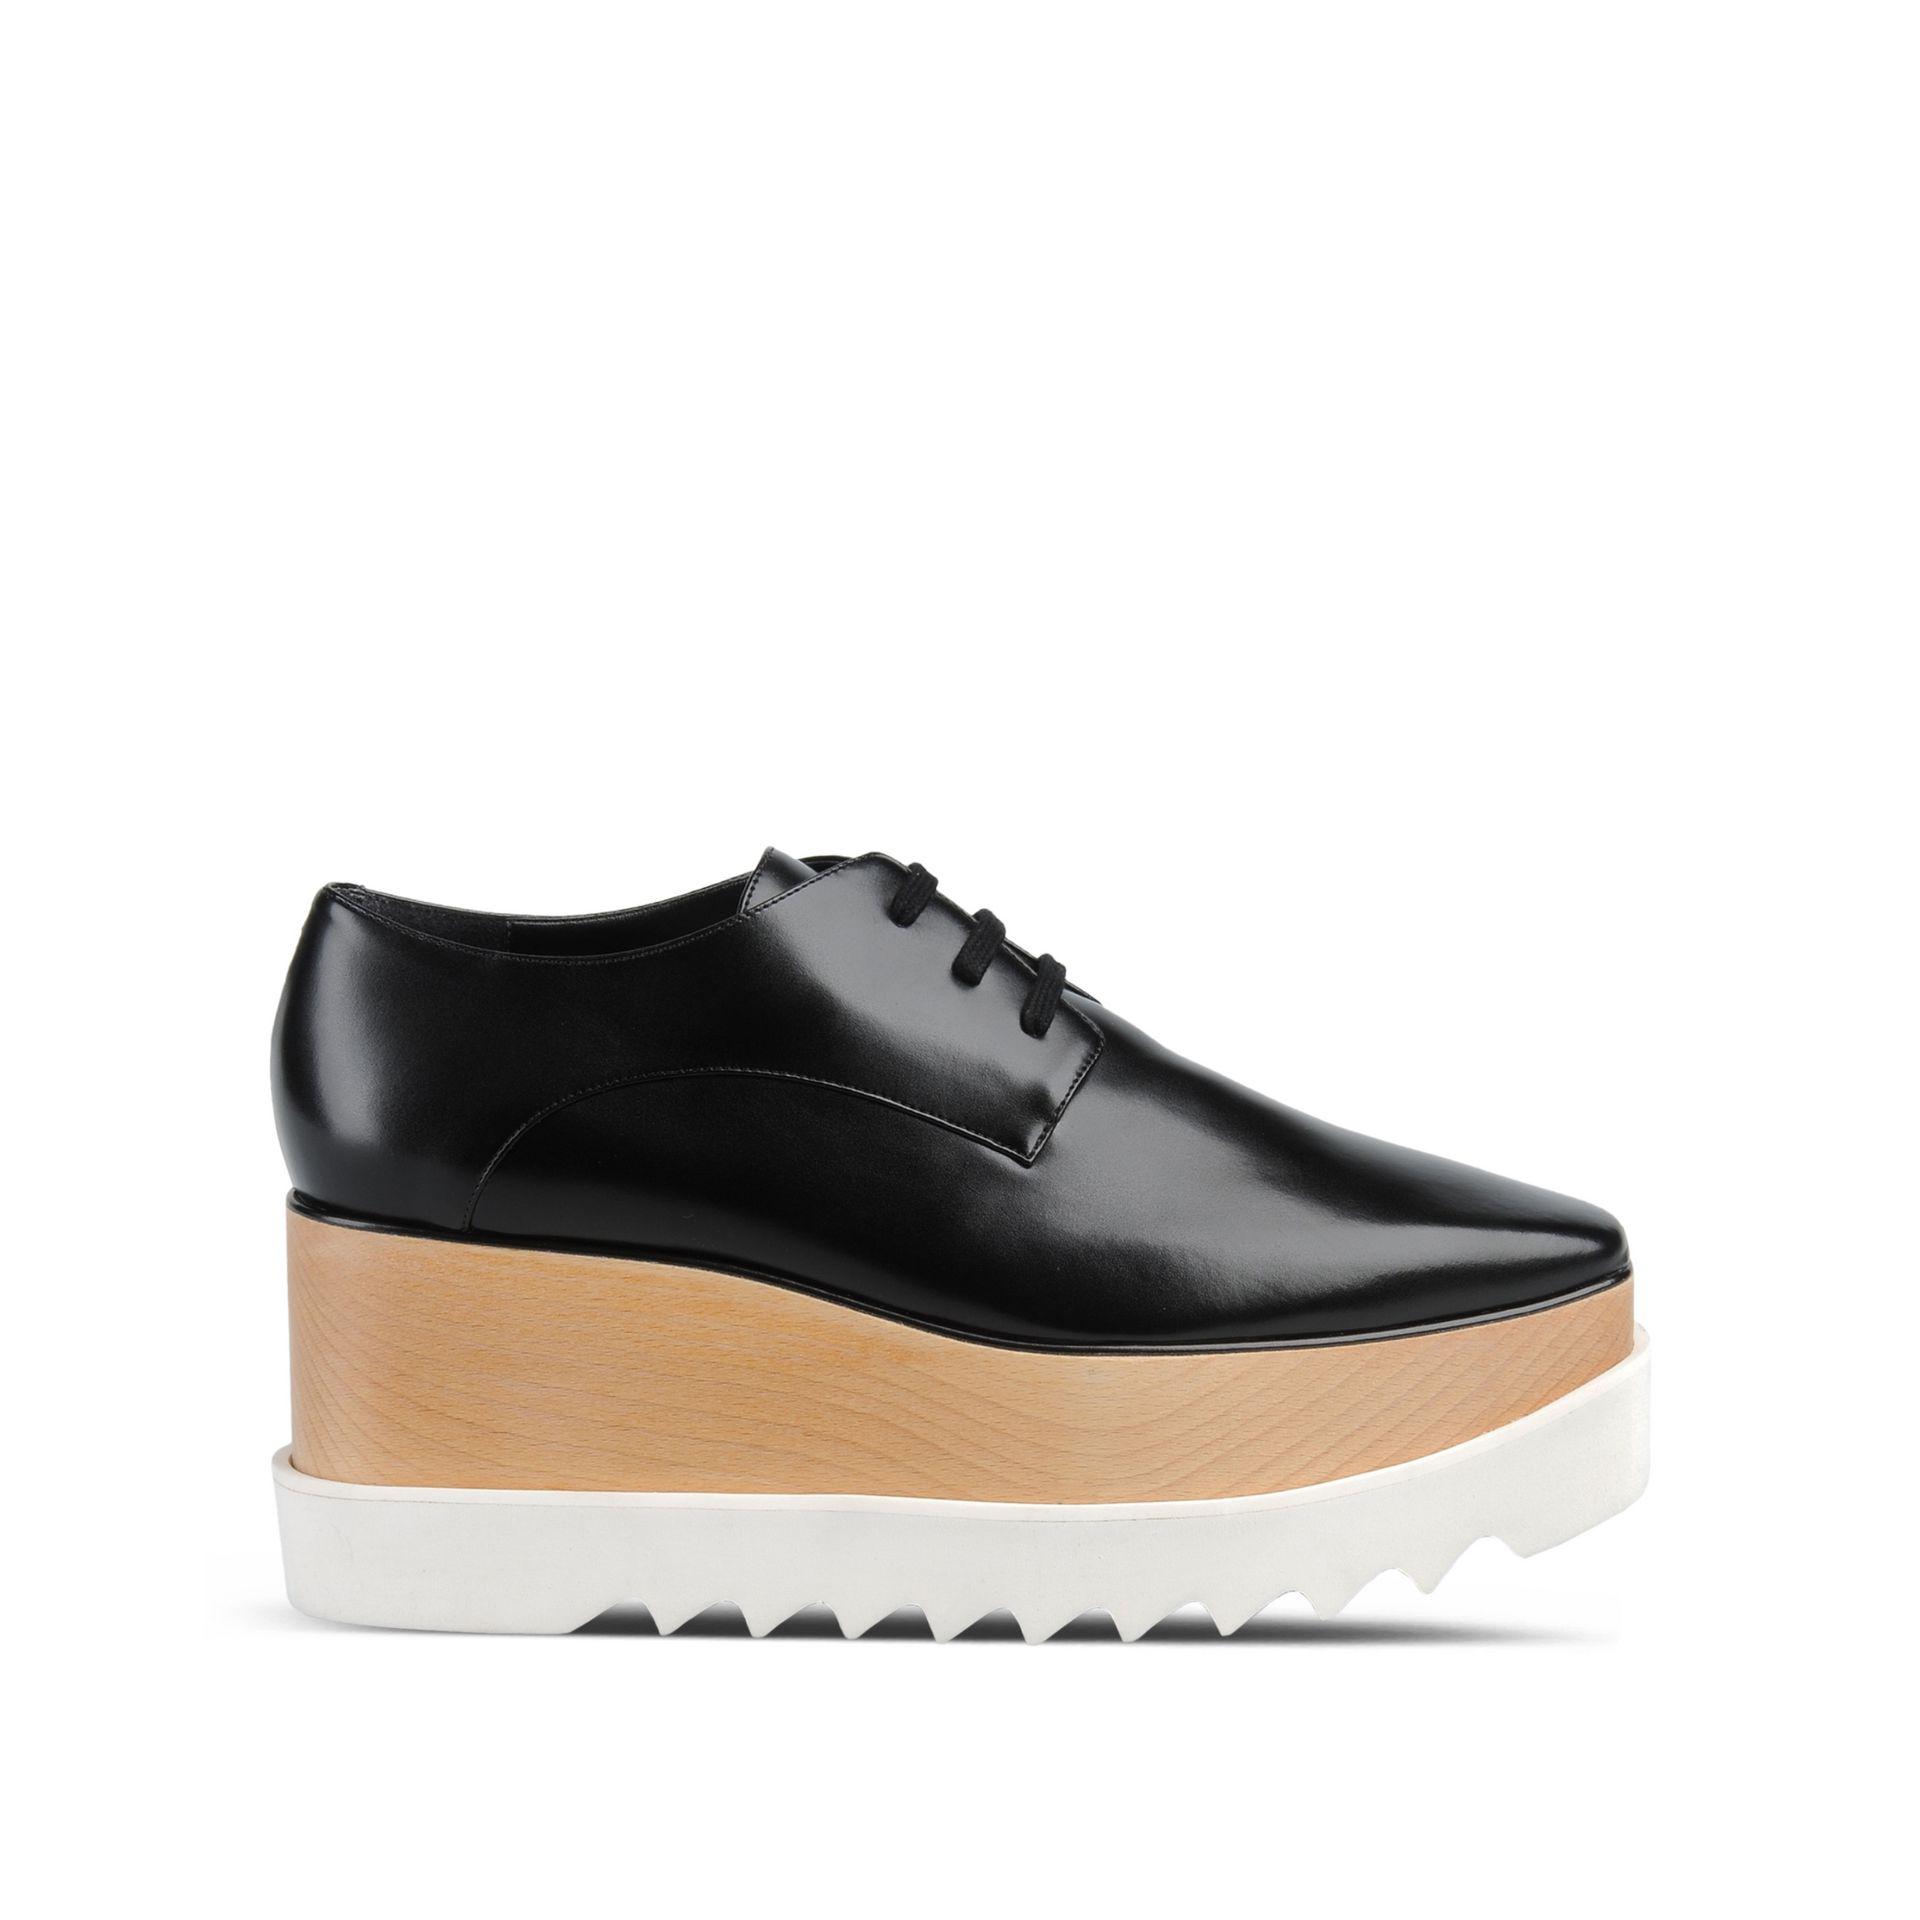 Lyst - Stella Mccartney Elyse Shoes in Black - Save 17%